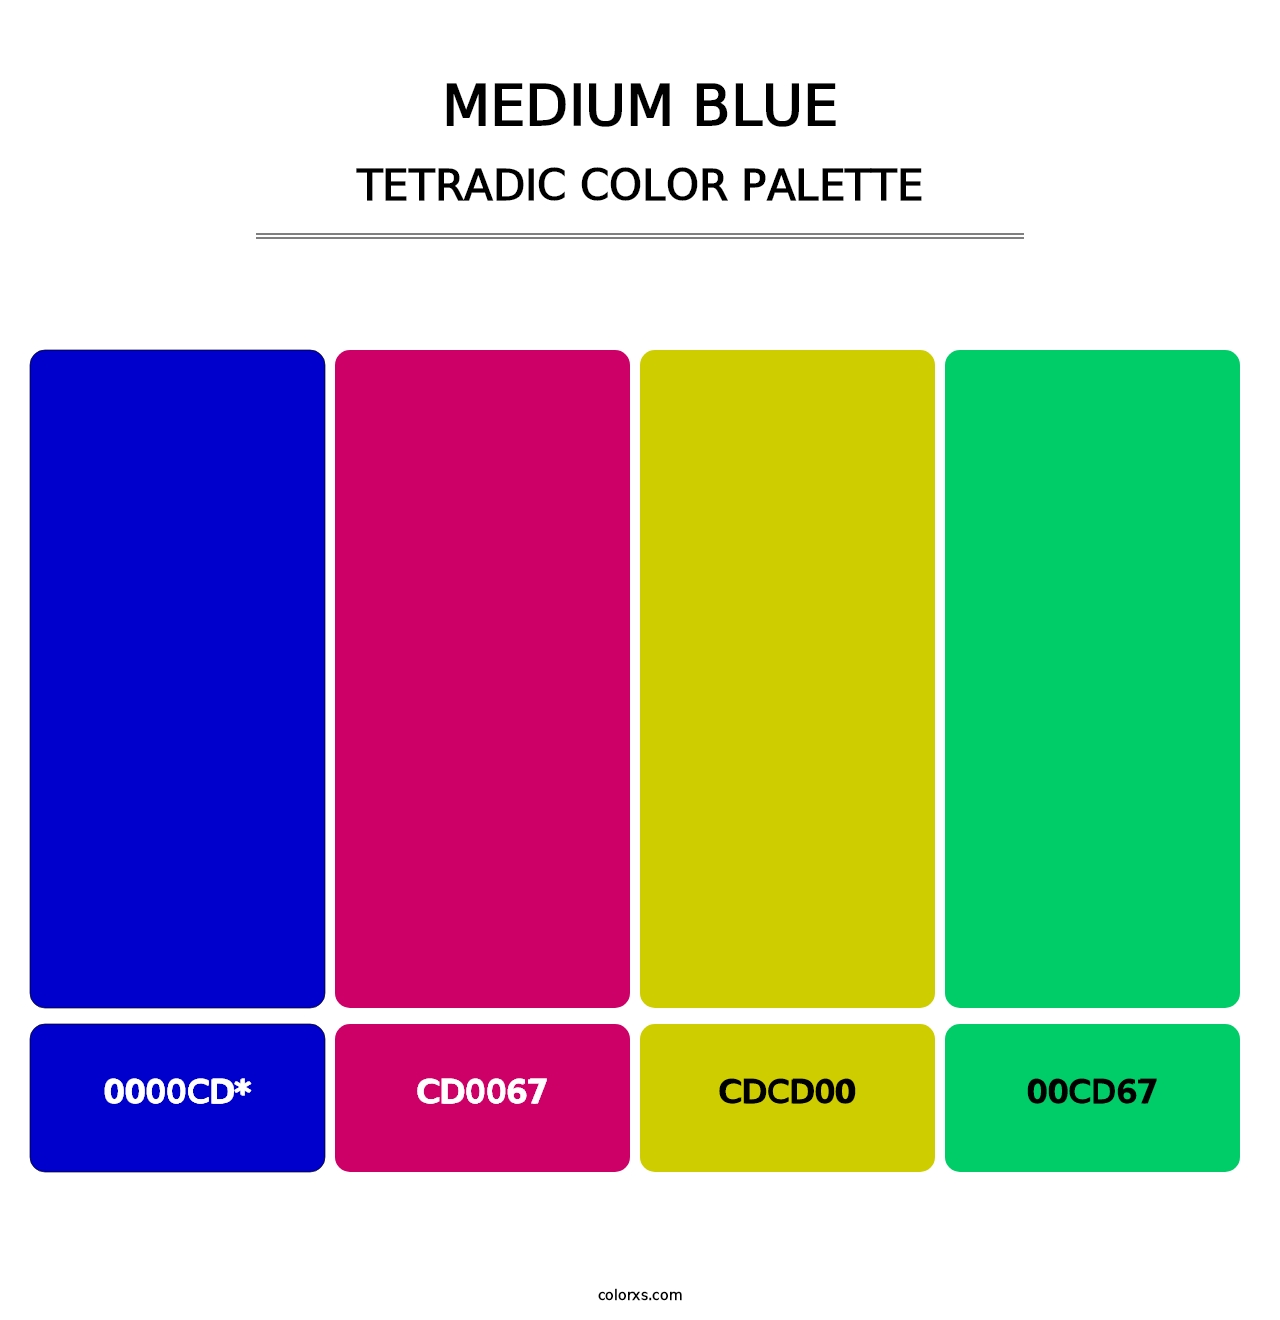 Medium Blue - Tetradic Color Palette